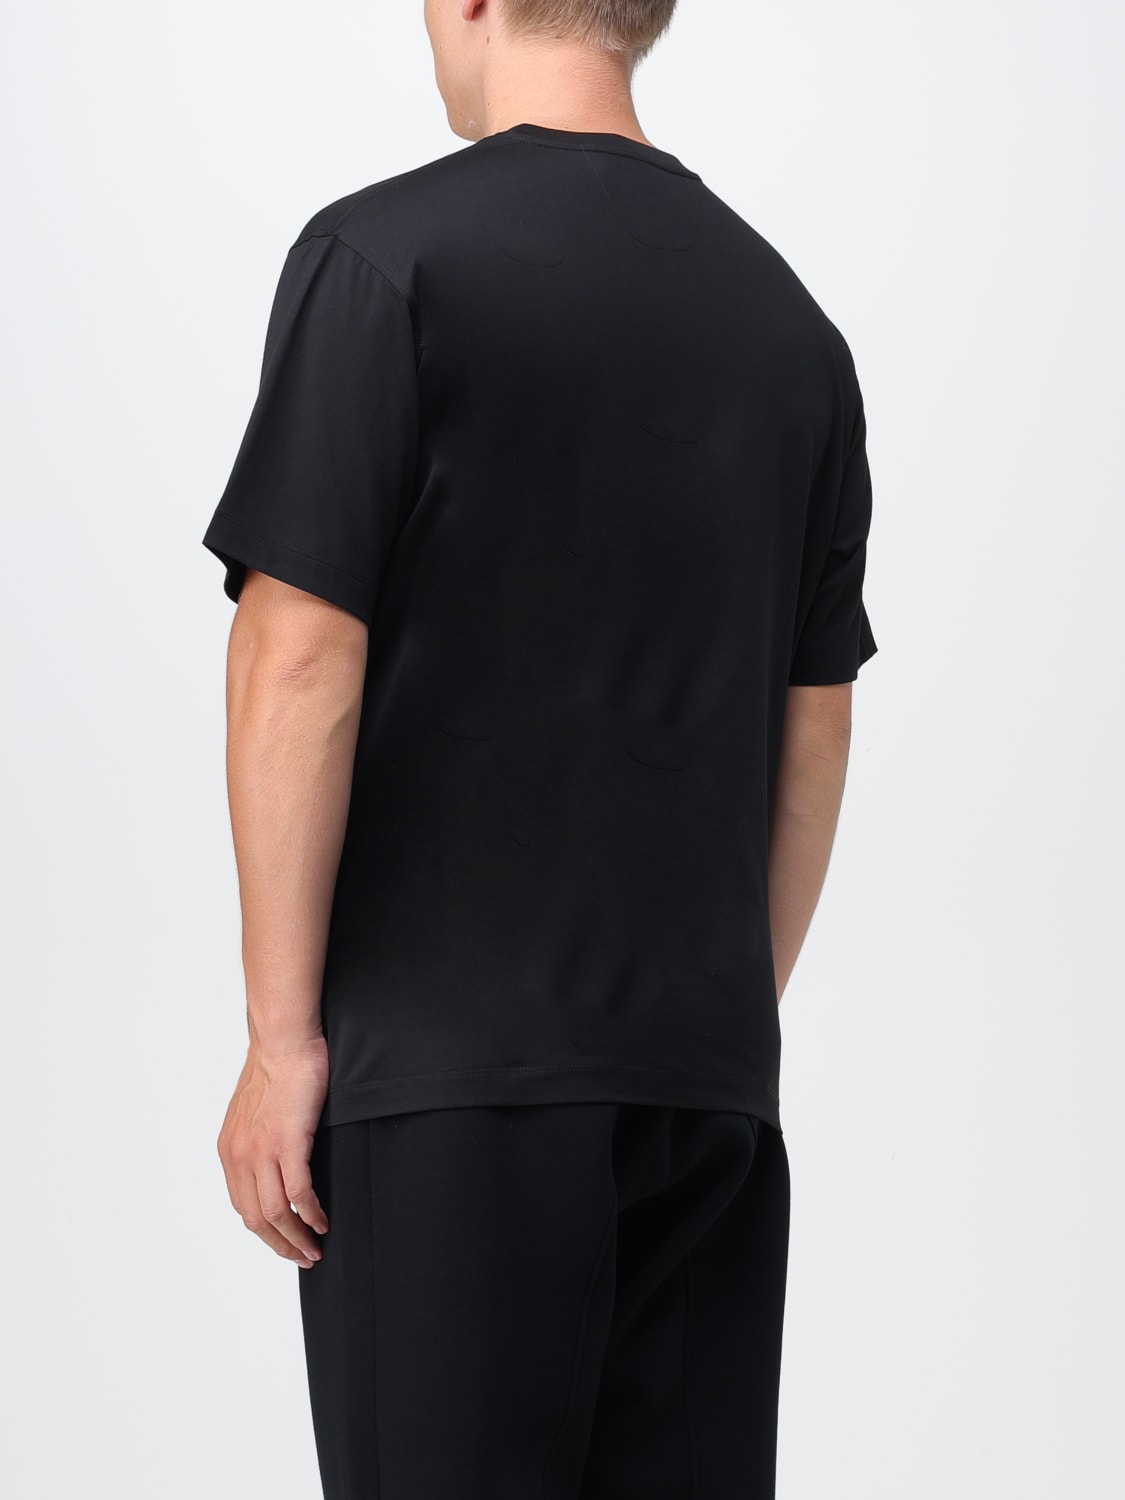 FERRARI: T-shirt homme - Noir  T-Shirt Ferrari 47825 en ligne sur